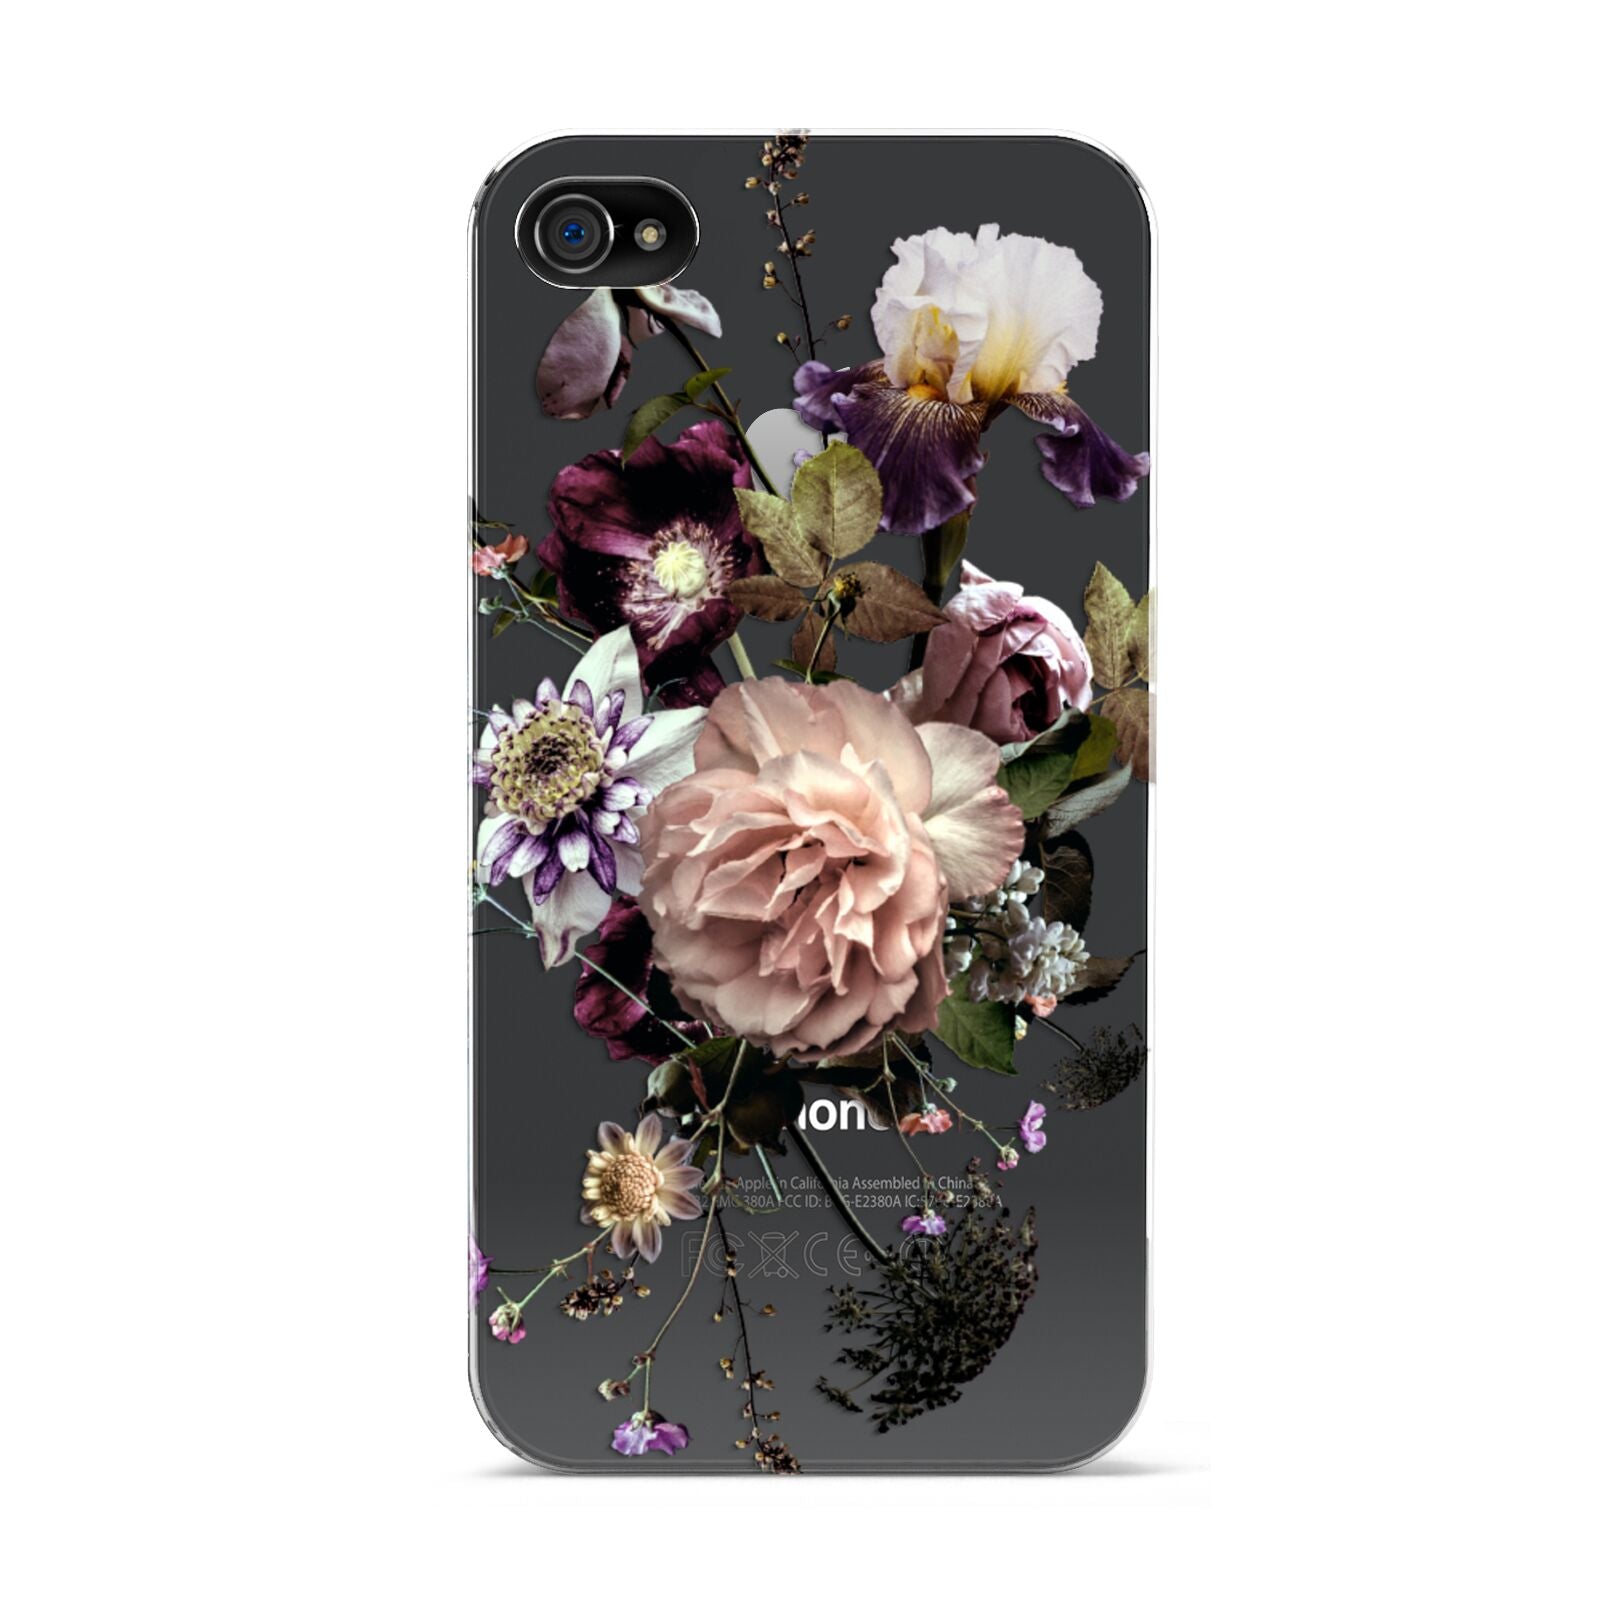 Vintage Flowers Apple iPhone 4s Case